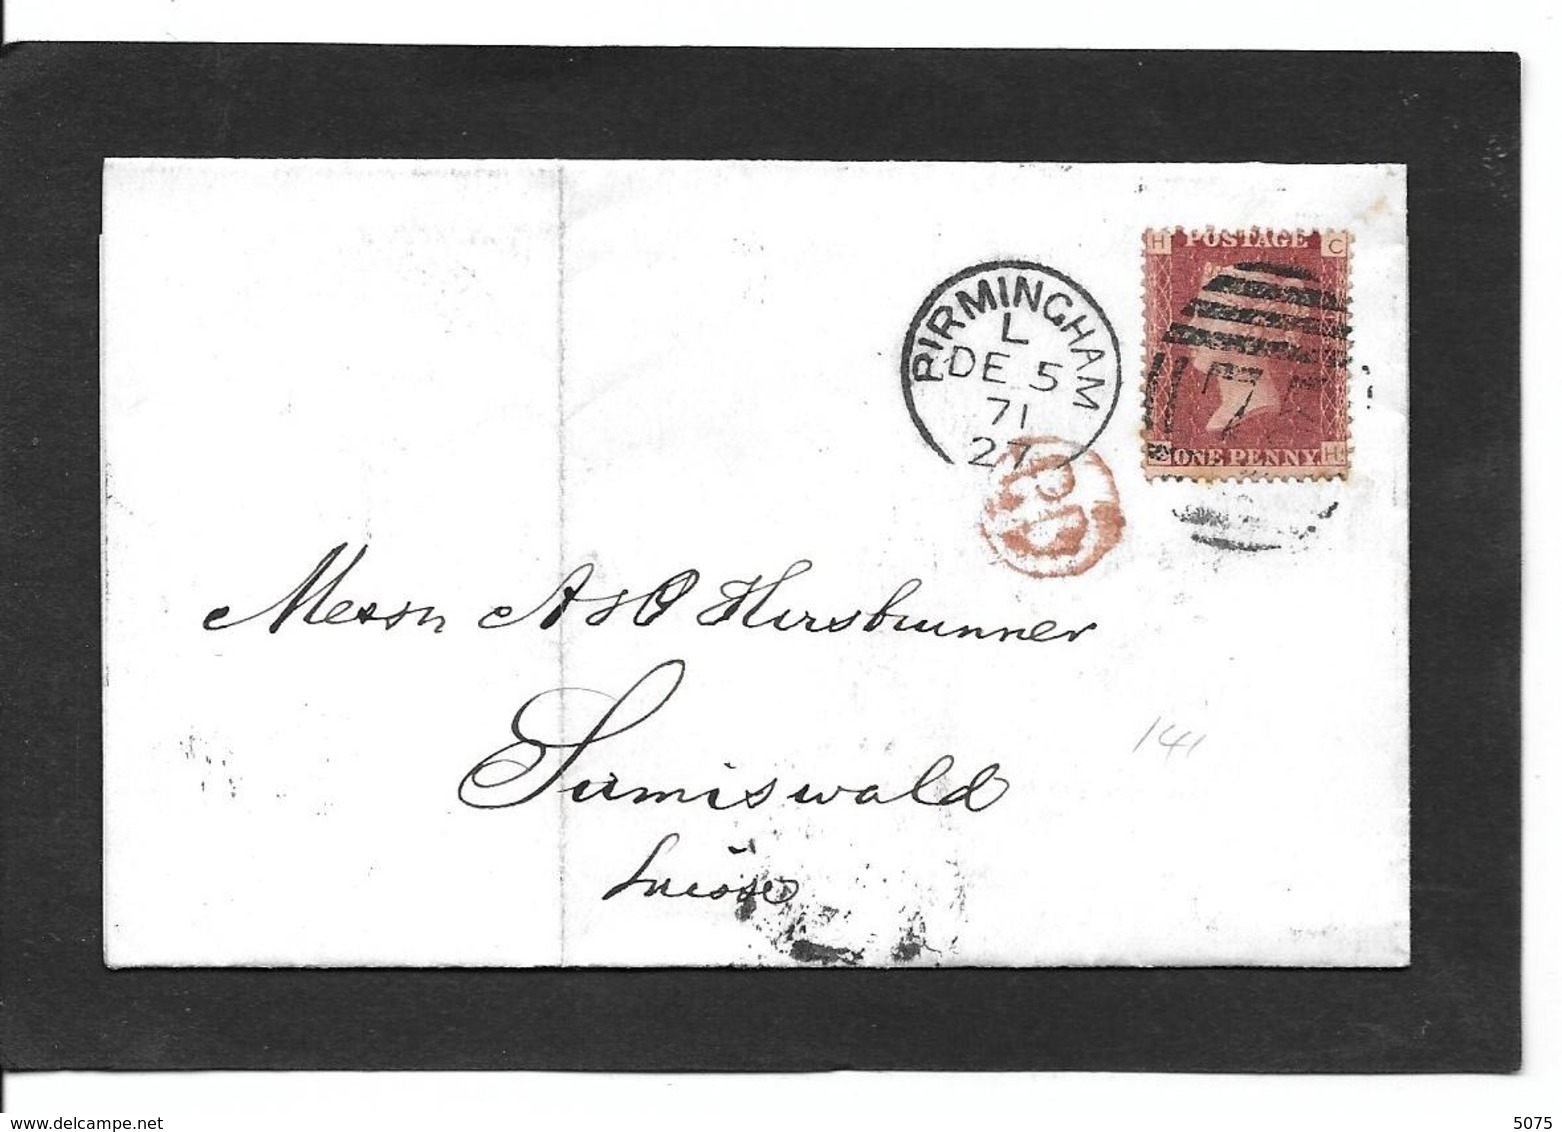 BIRMINGHAM 5.12.1871 StG 43  Pl 141 - Covers & Documents